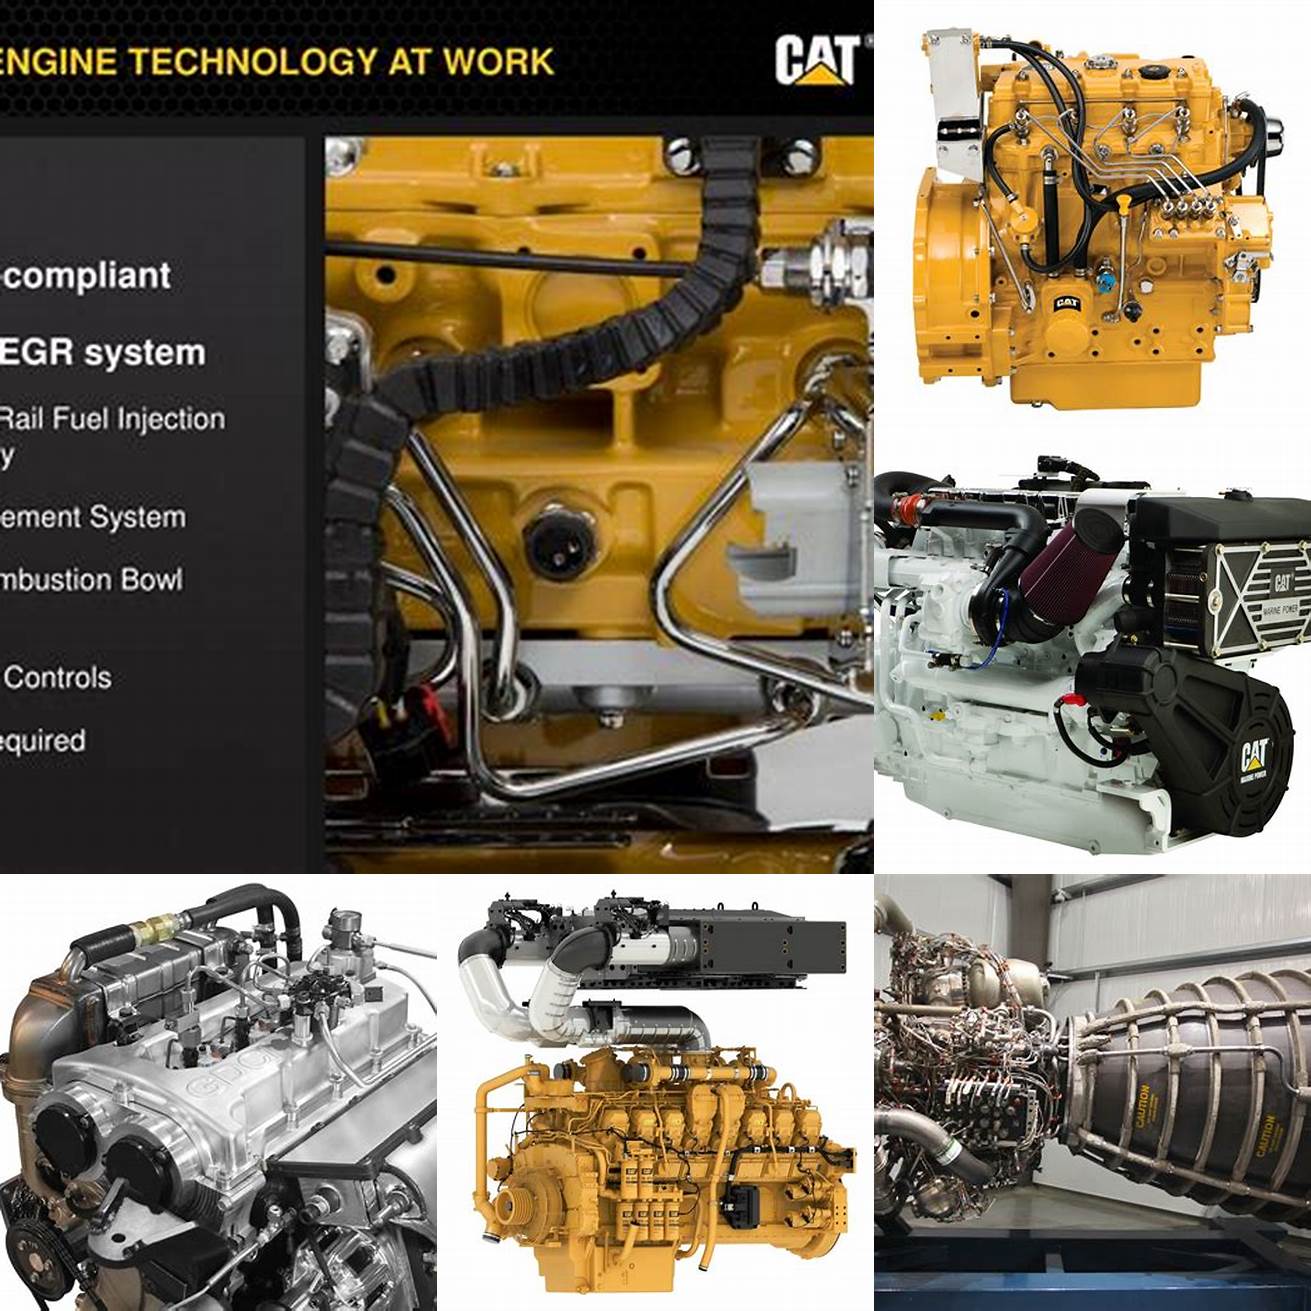 1 Advanced Engine Technology